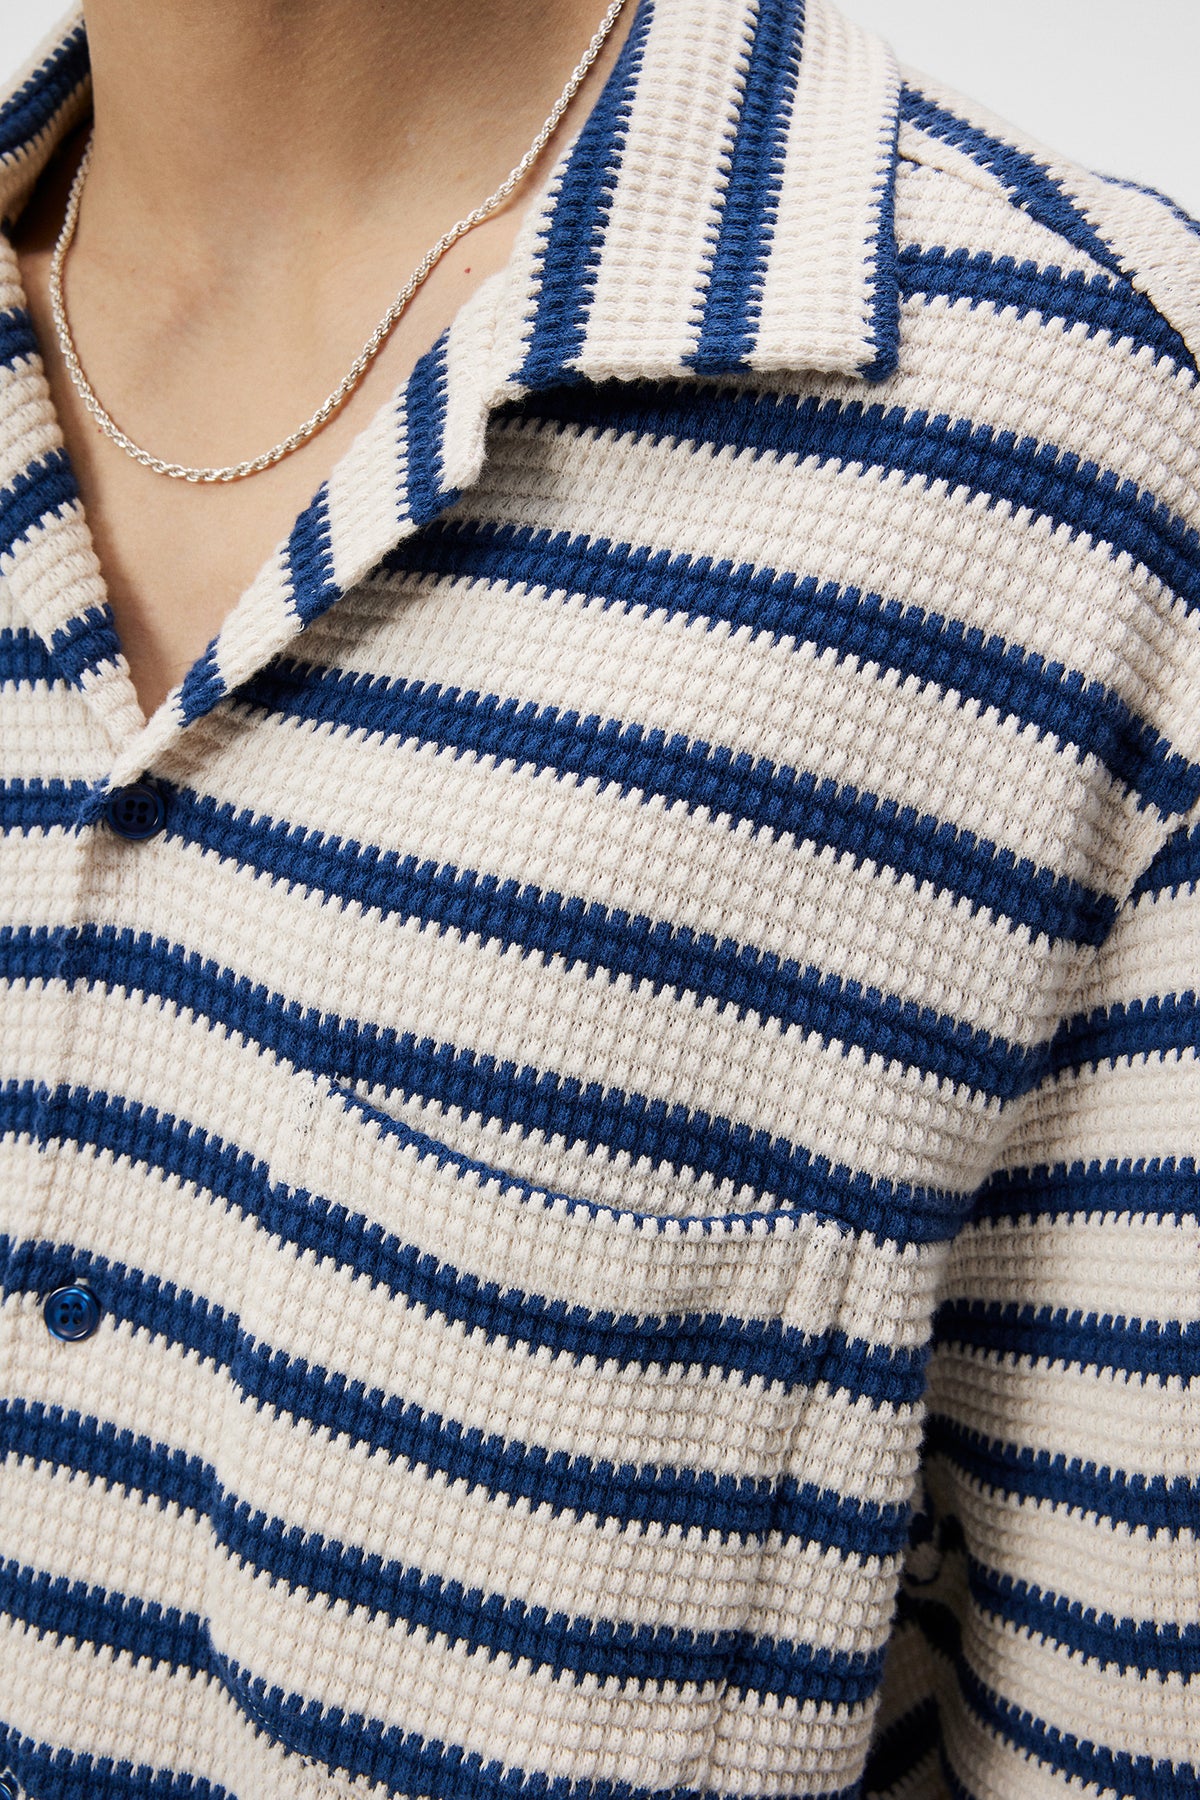 Tiro Resort Stripe Shirt / Estate Blue